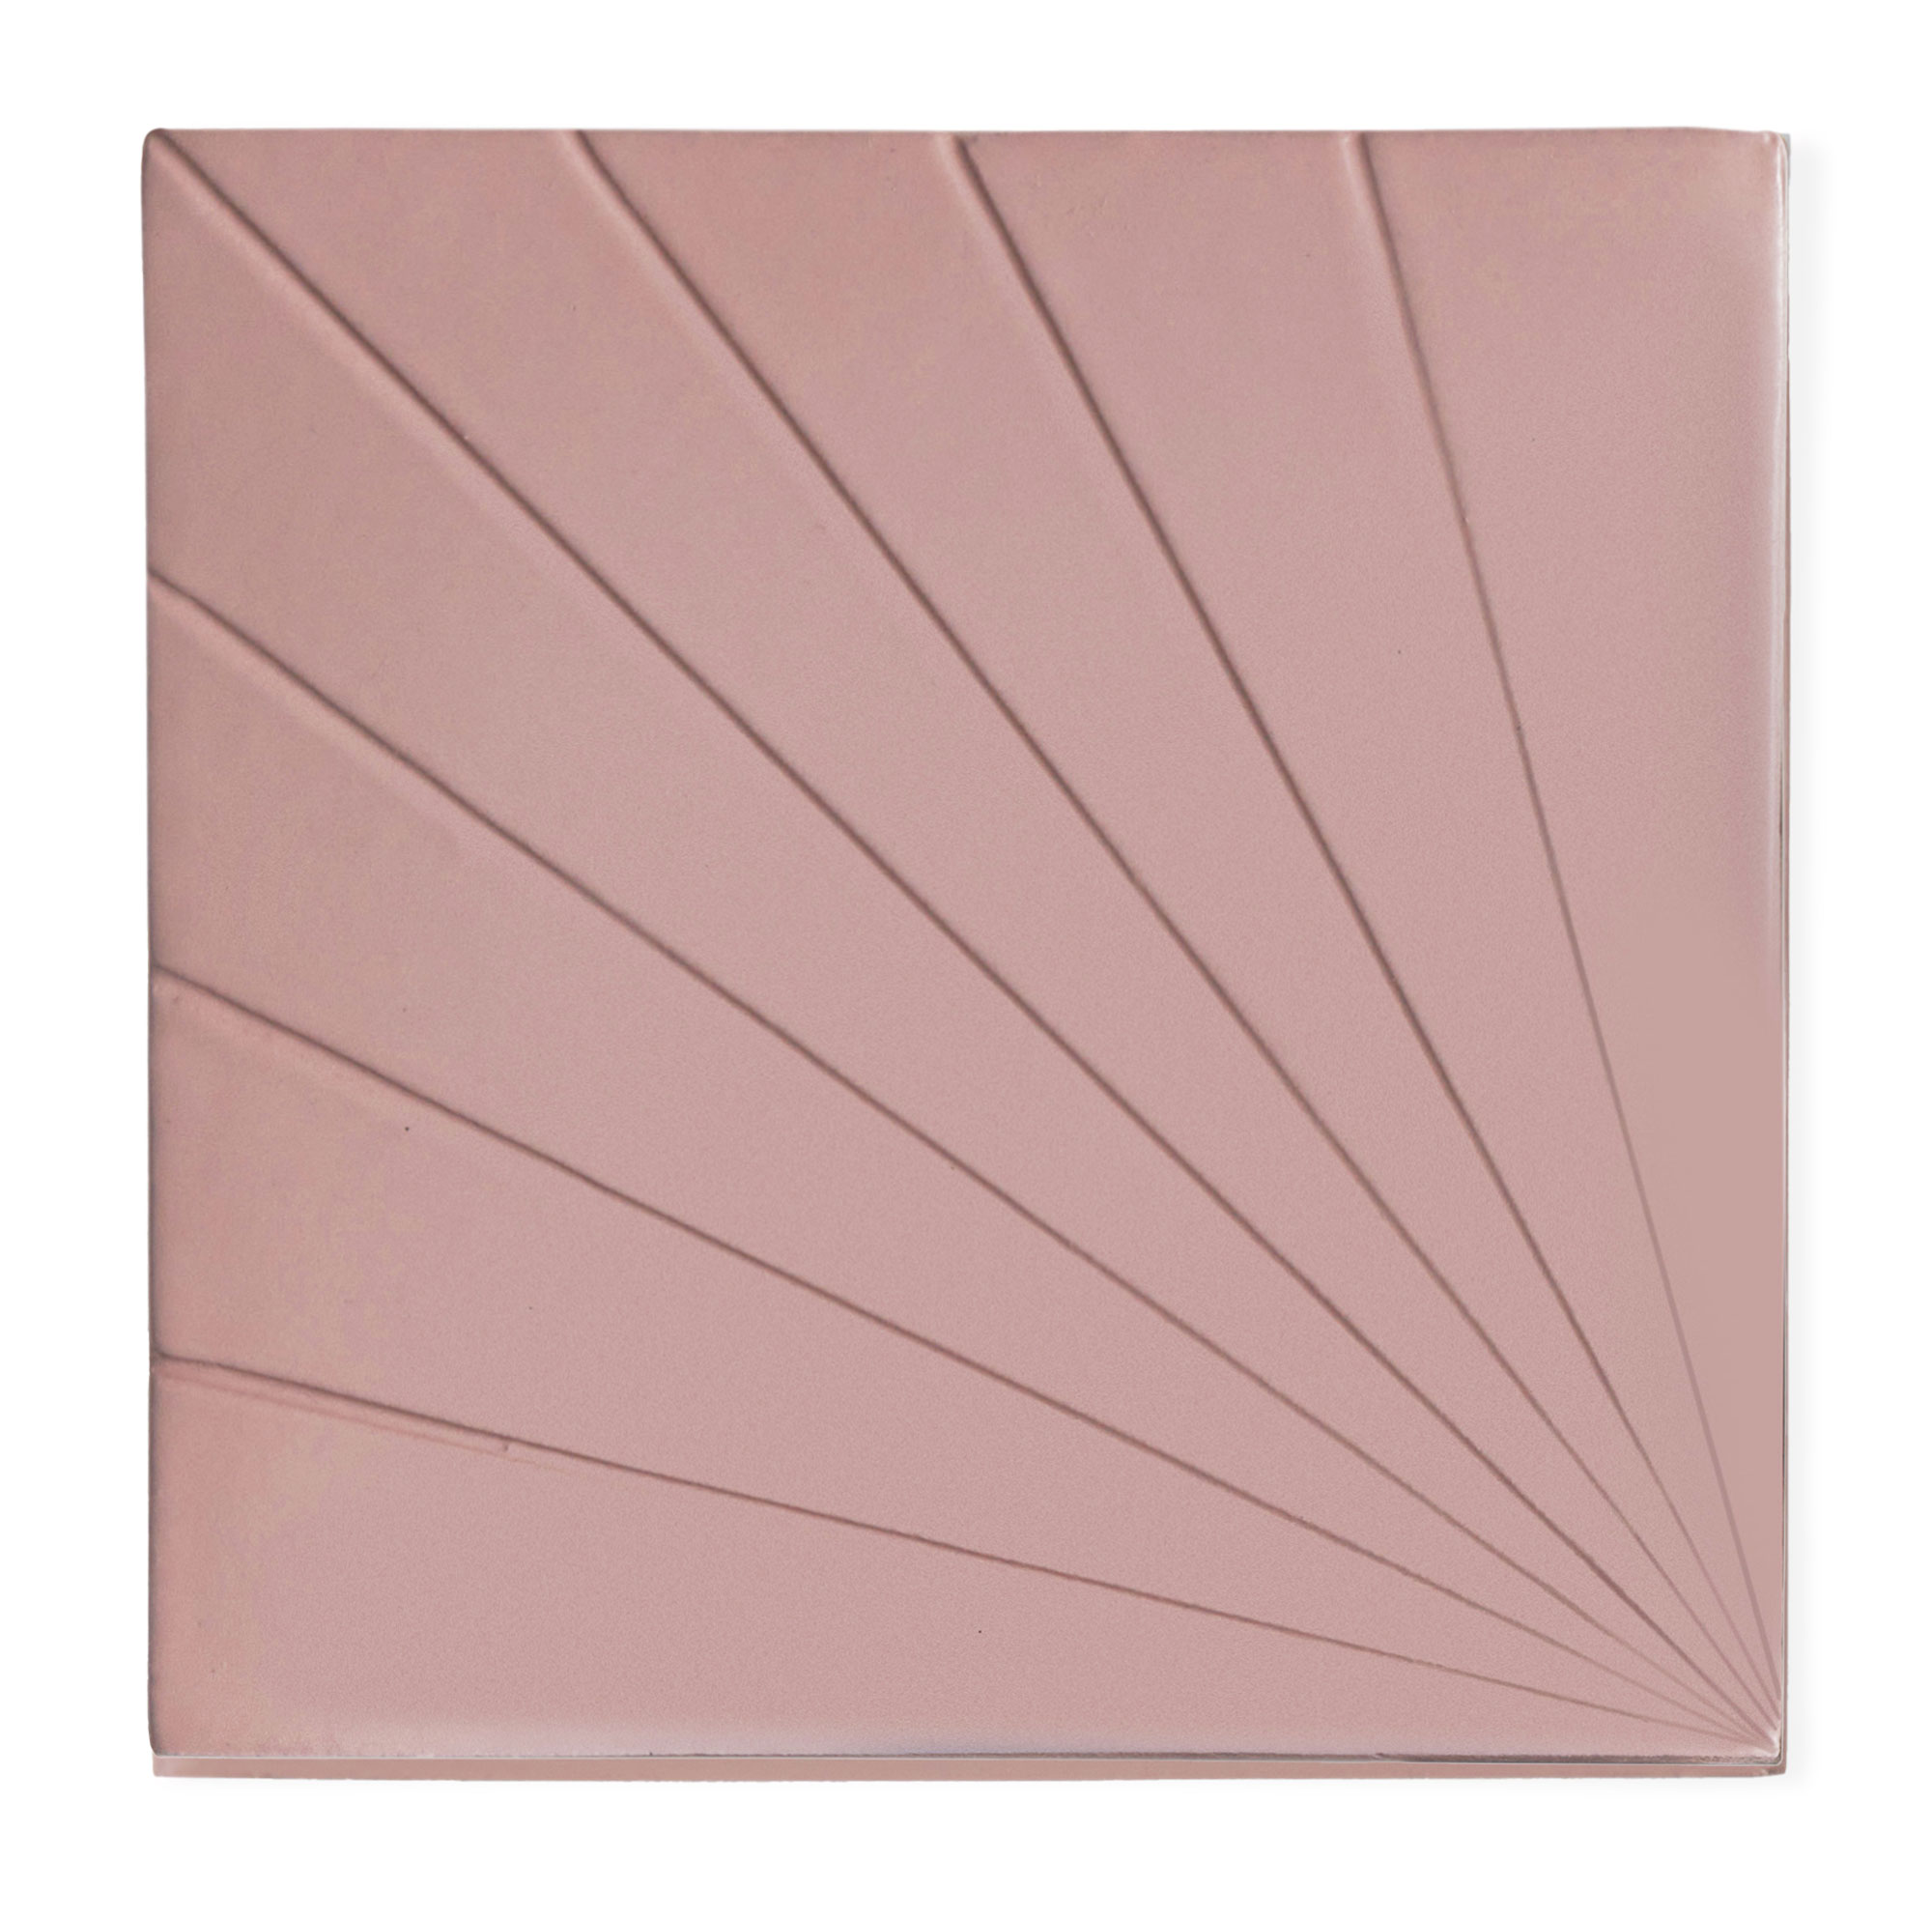 Sample: Tulum Pink 6x6 - Dimensional Relief Artisan Ceramic Tile